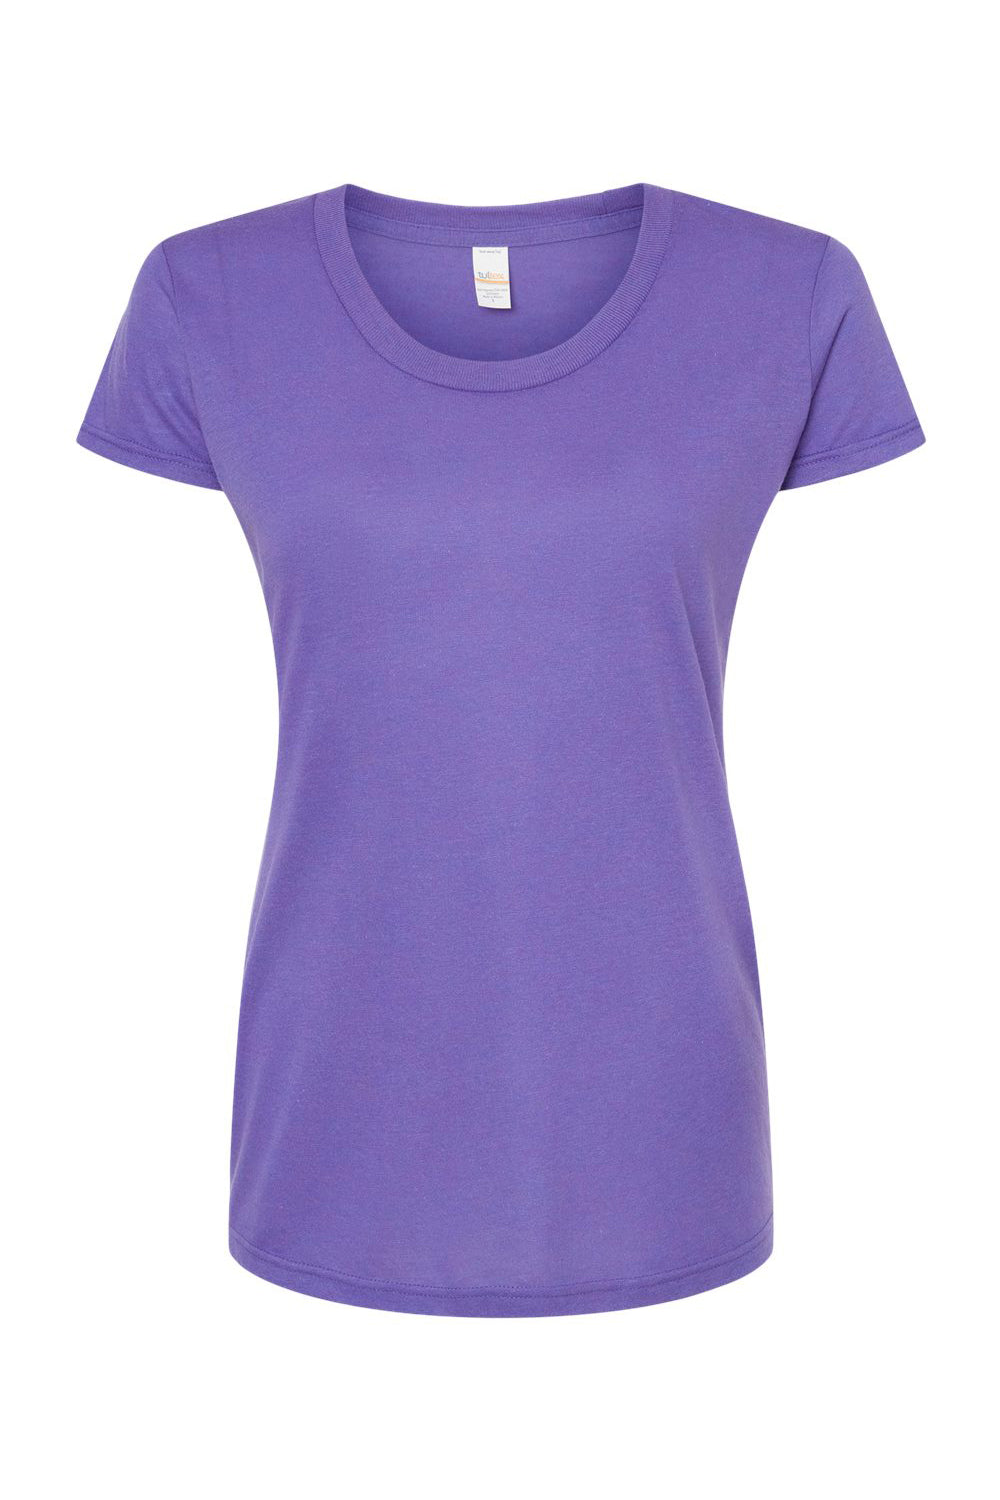 Tultex 253 Womens Short Sleeve Crewneck T-Shirt Lilac Purple Flat Front